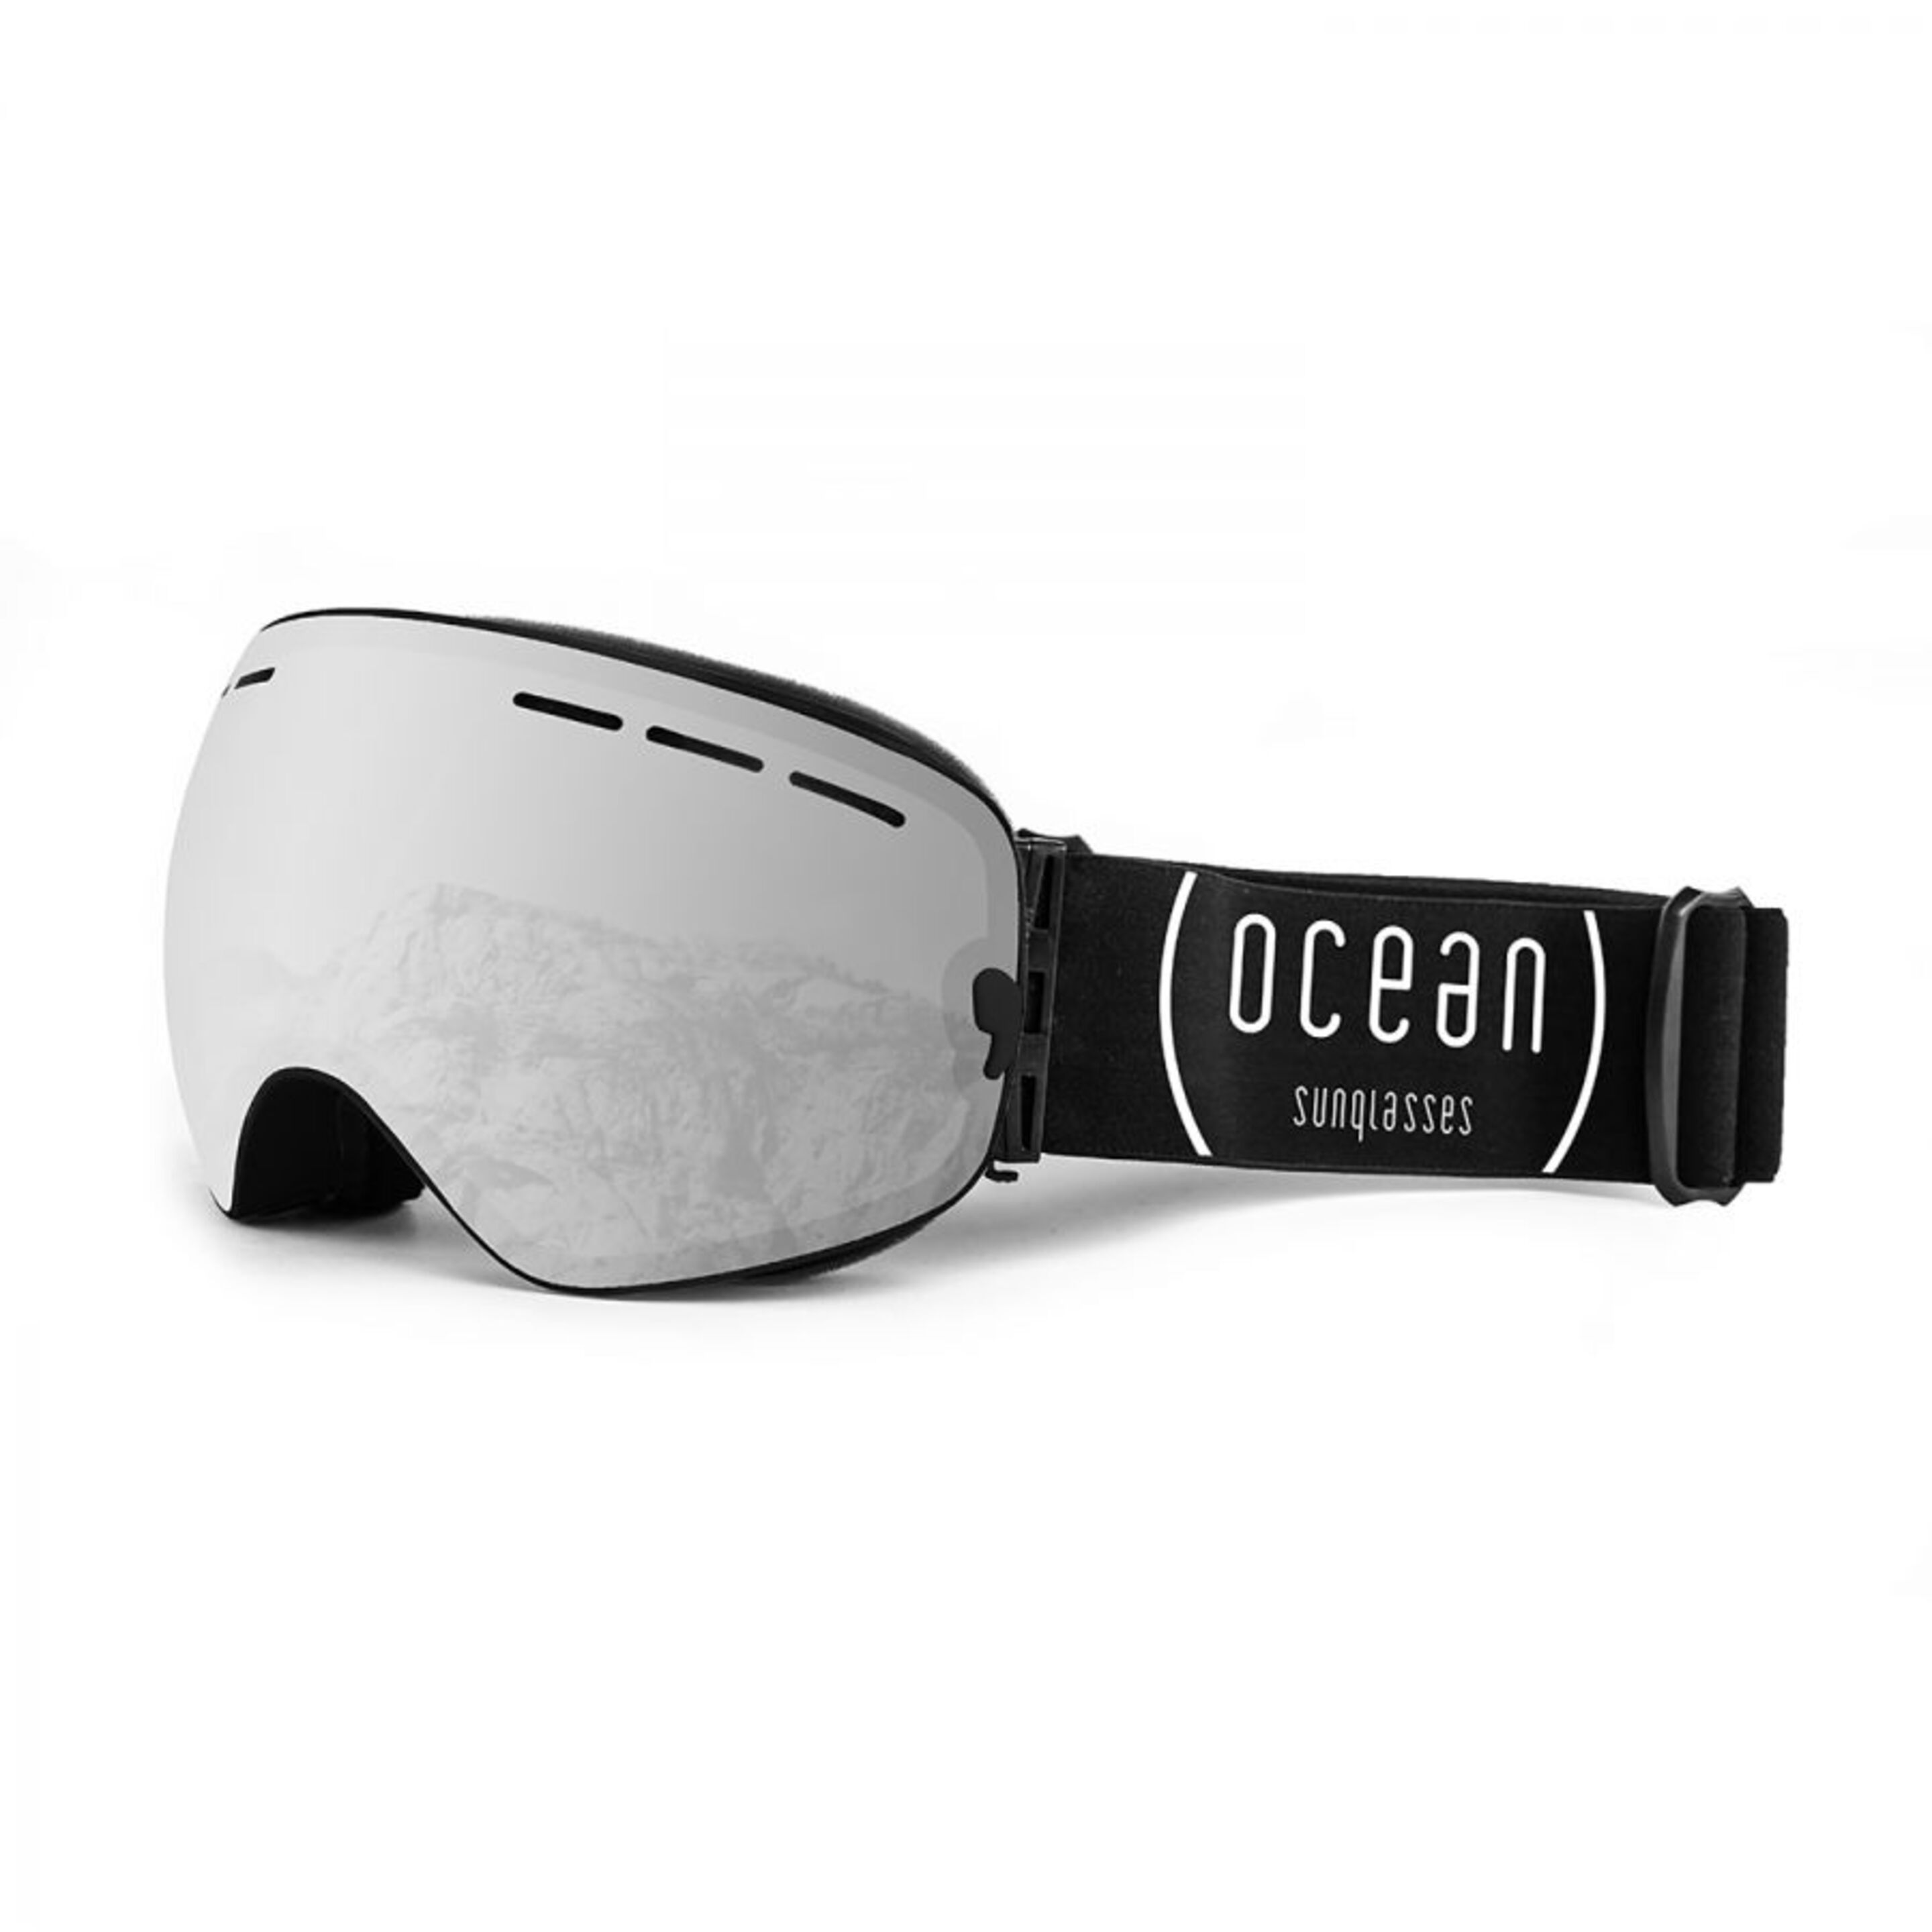 Óculos De Ski Cervino Ocean Sunglasses - gris - 